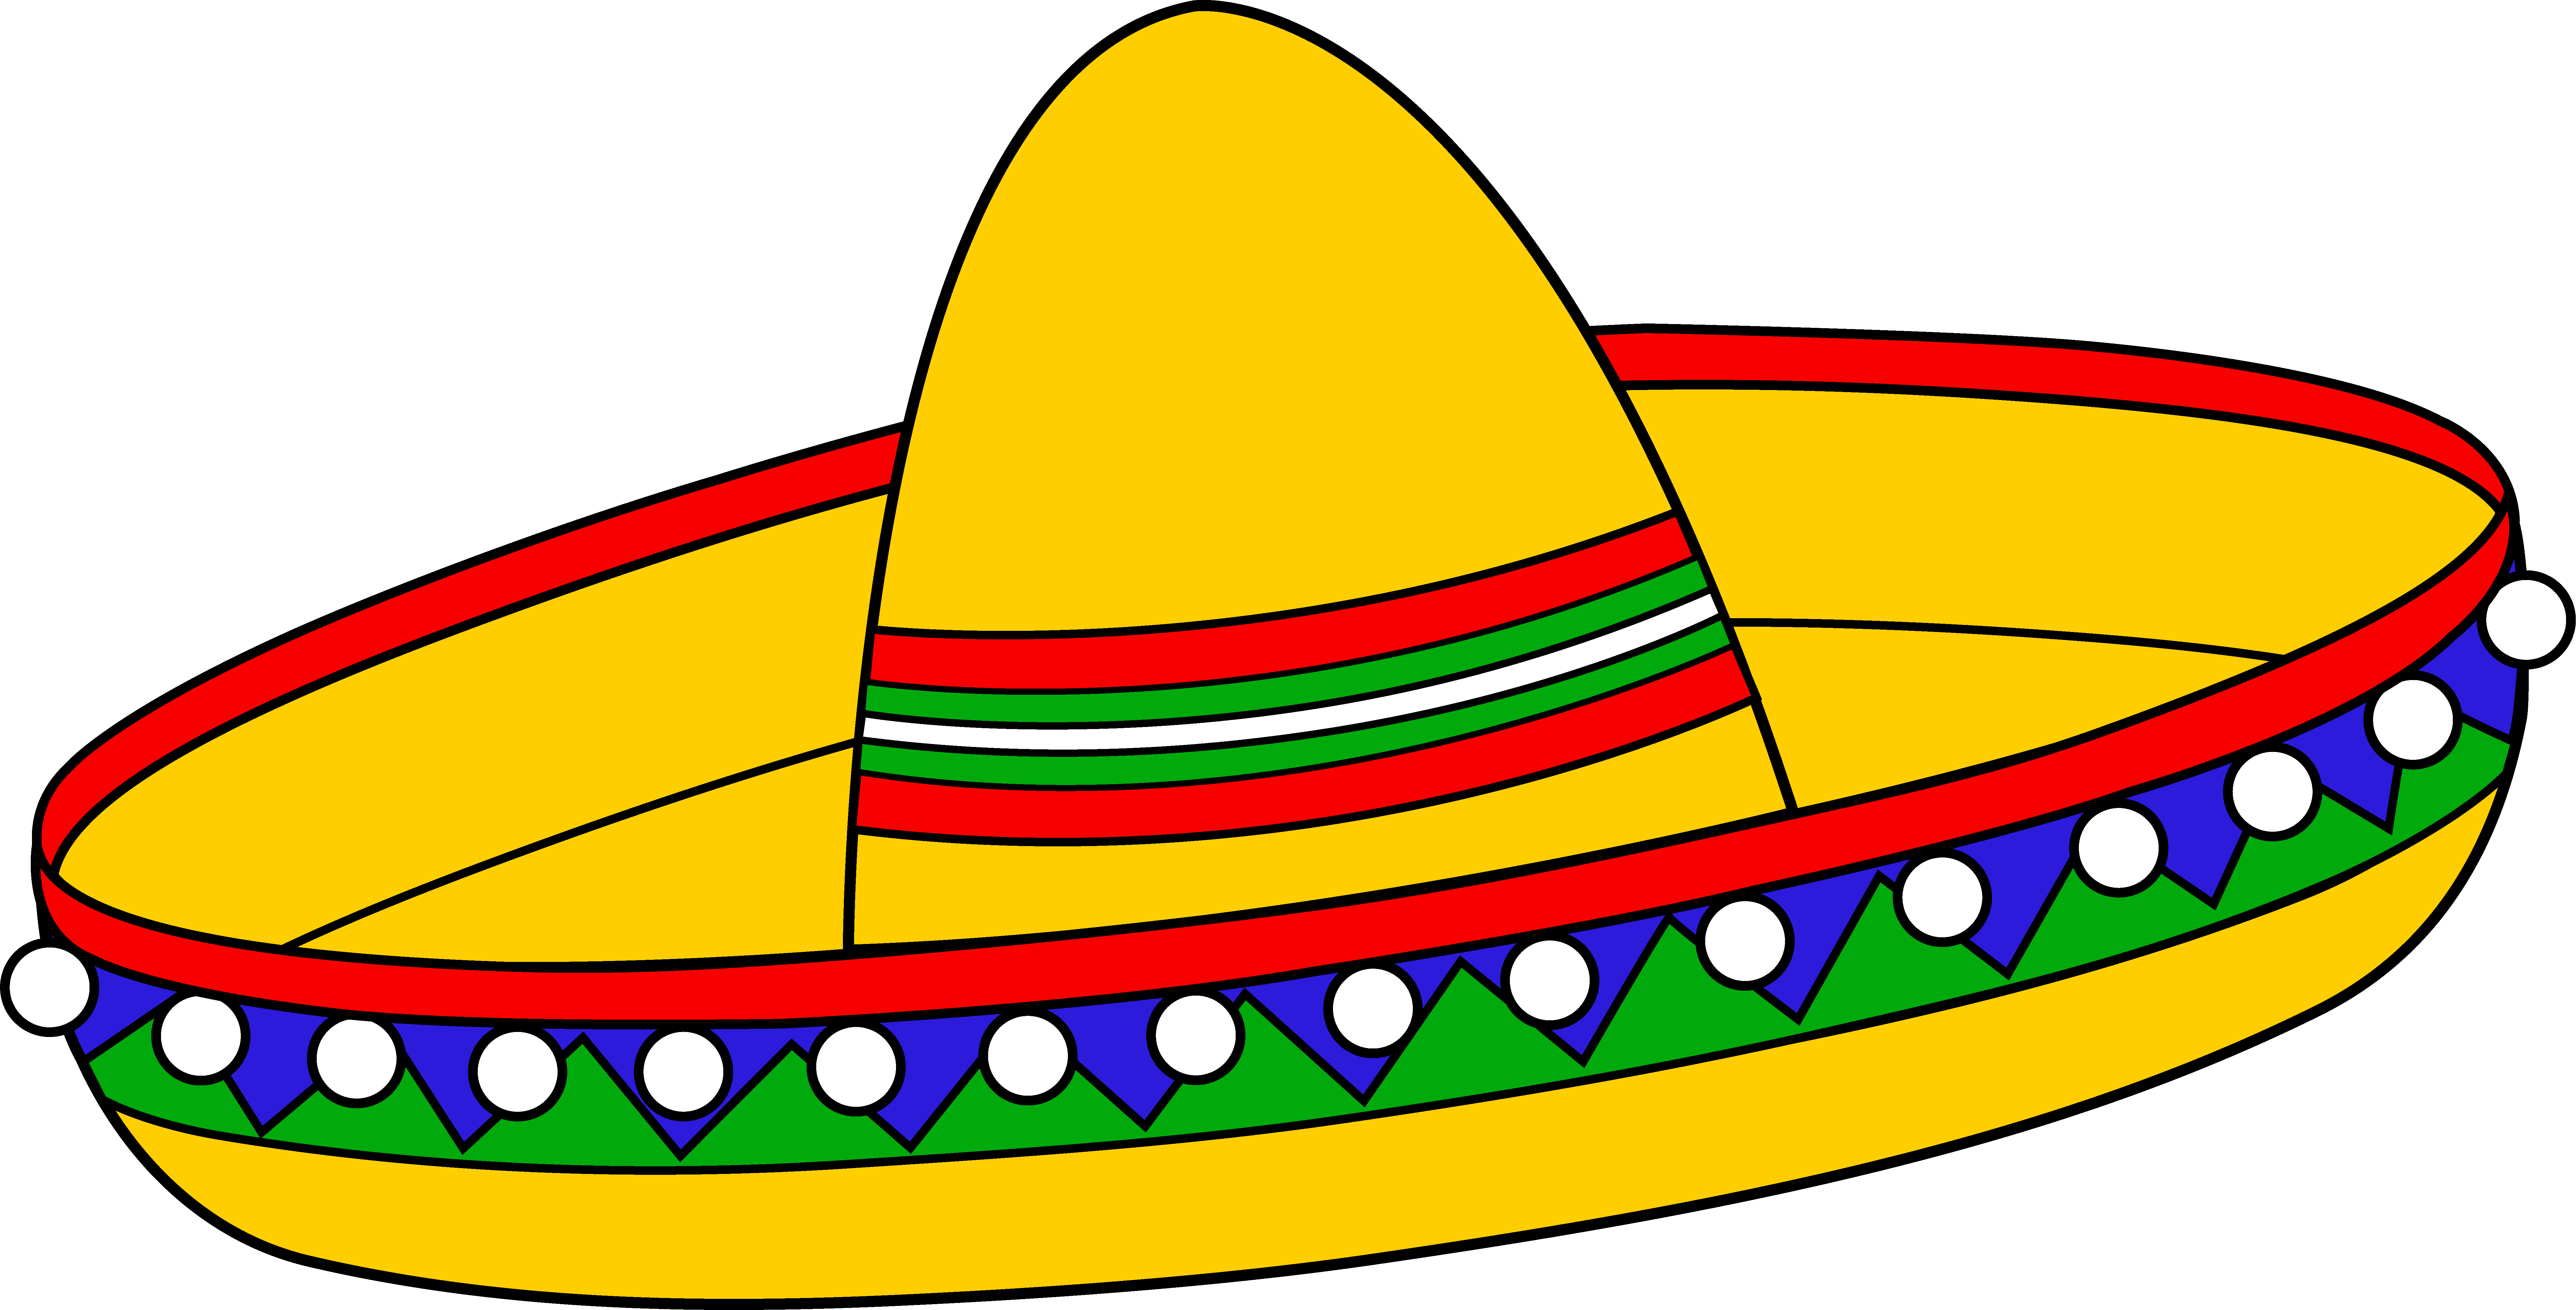 Smores clipart printable. Colorful mexican sombrero hat